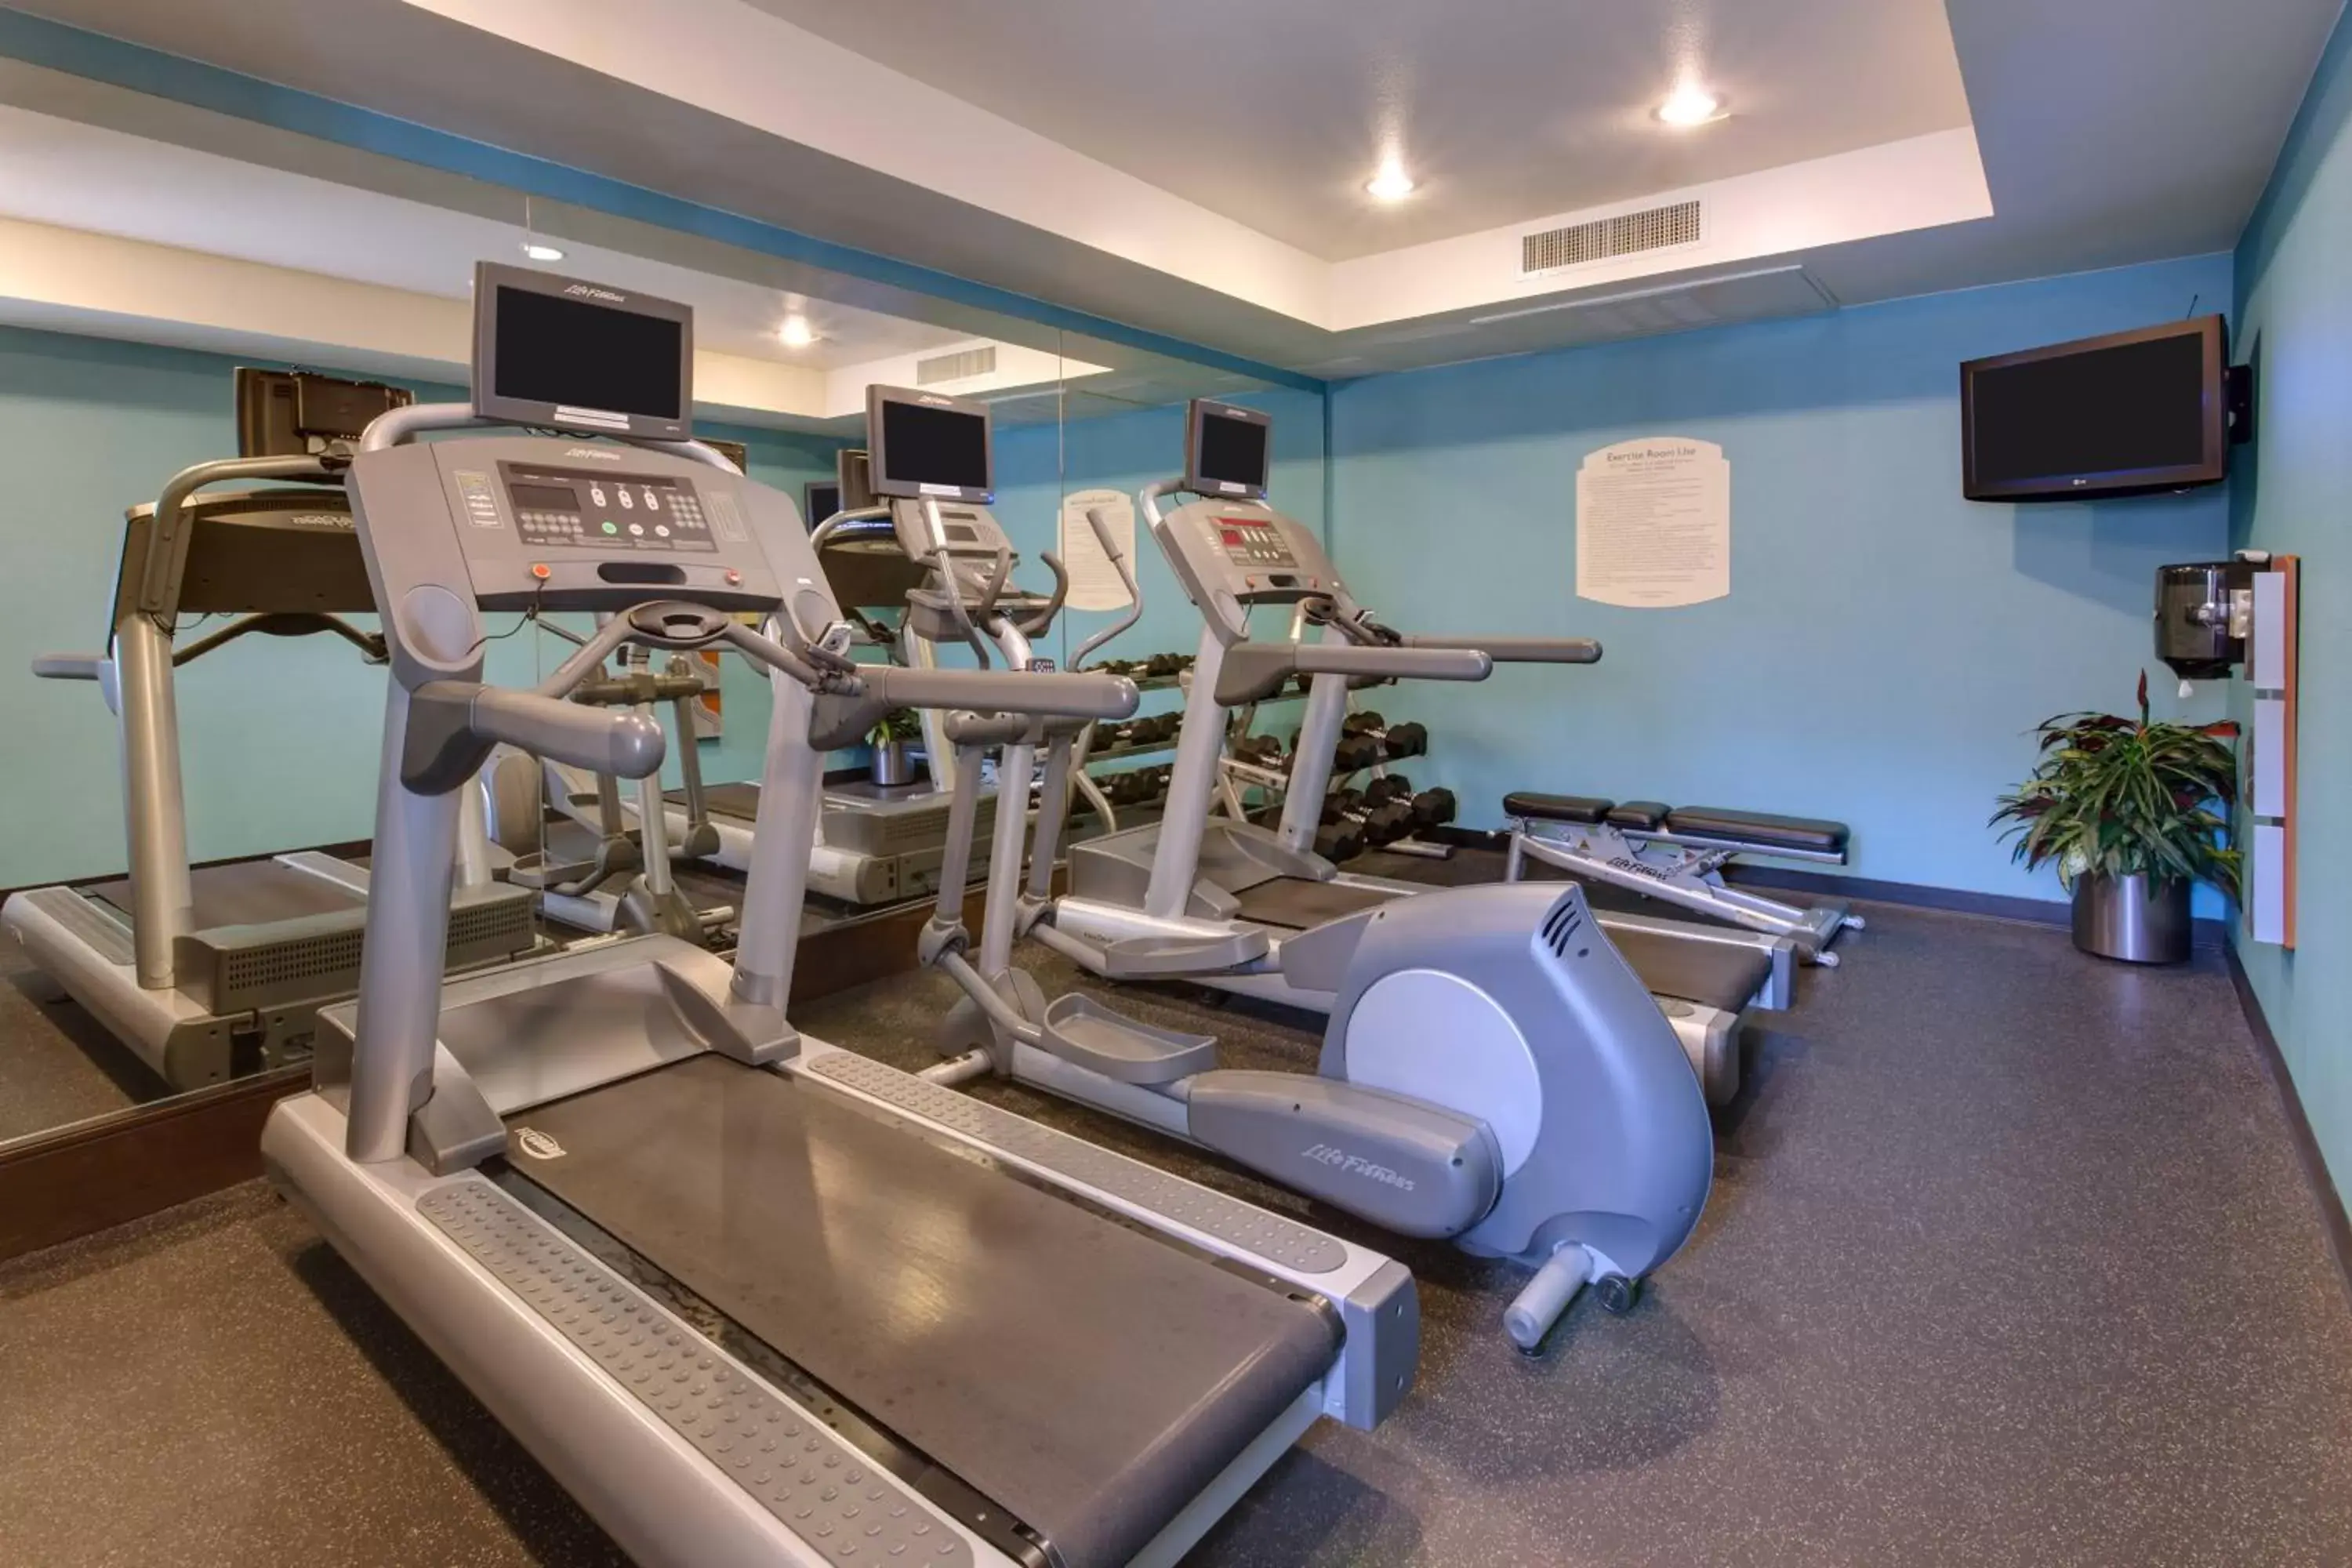 Fitness centre/facilities, Fitness Center/Facilities in Fairfield Inn & Suites by Marriott San Francisco Airport/Millbrae